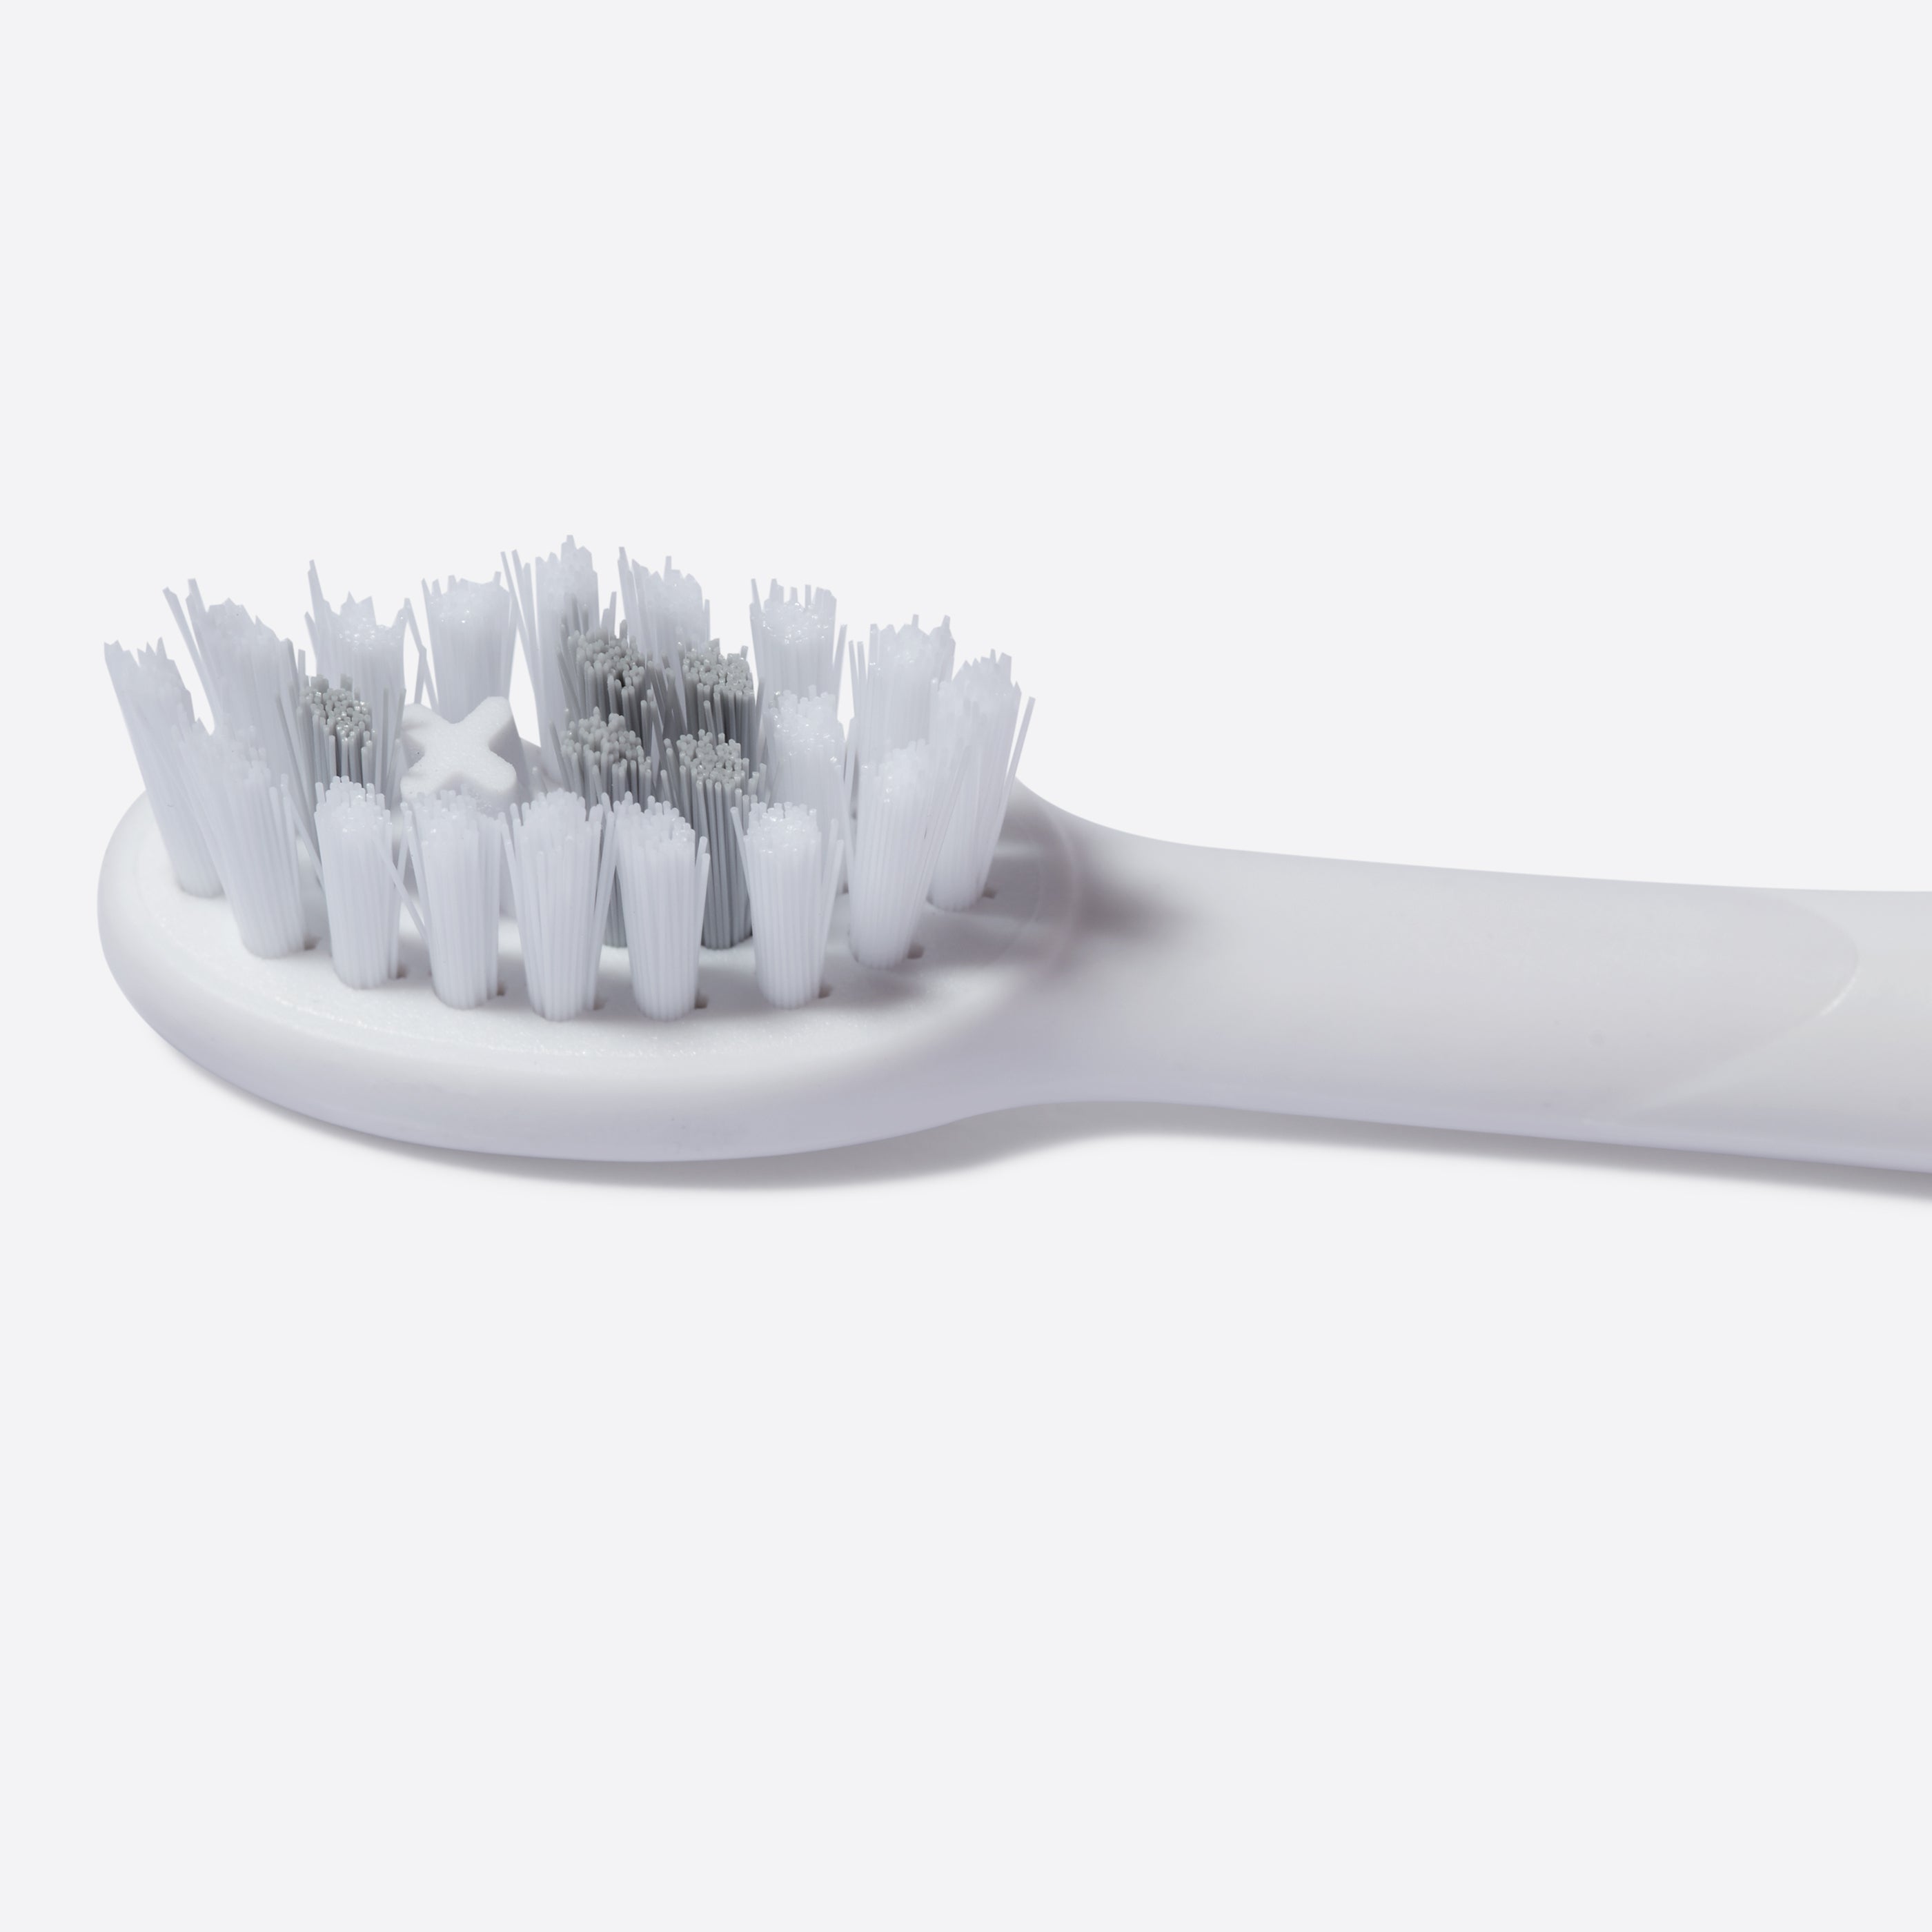 Sonic XP Toothbrush – white